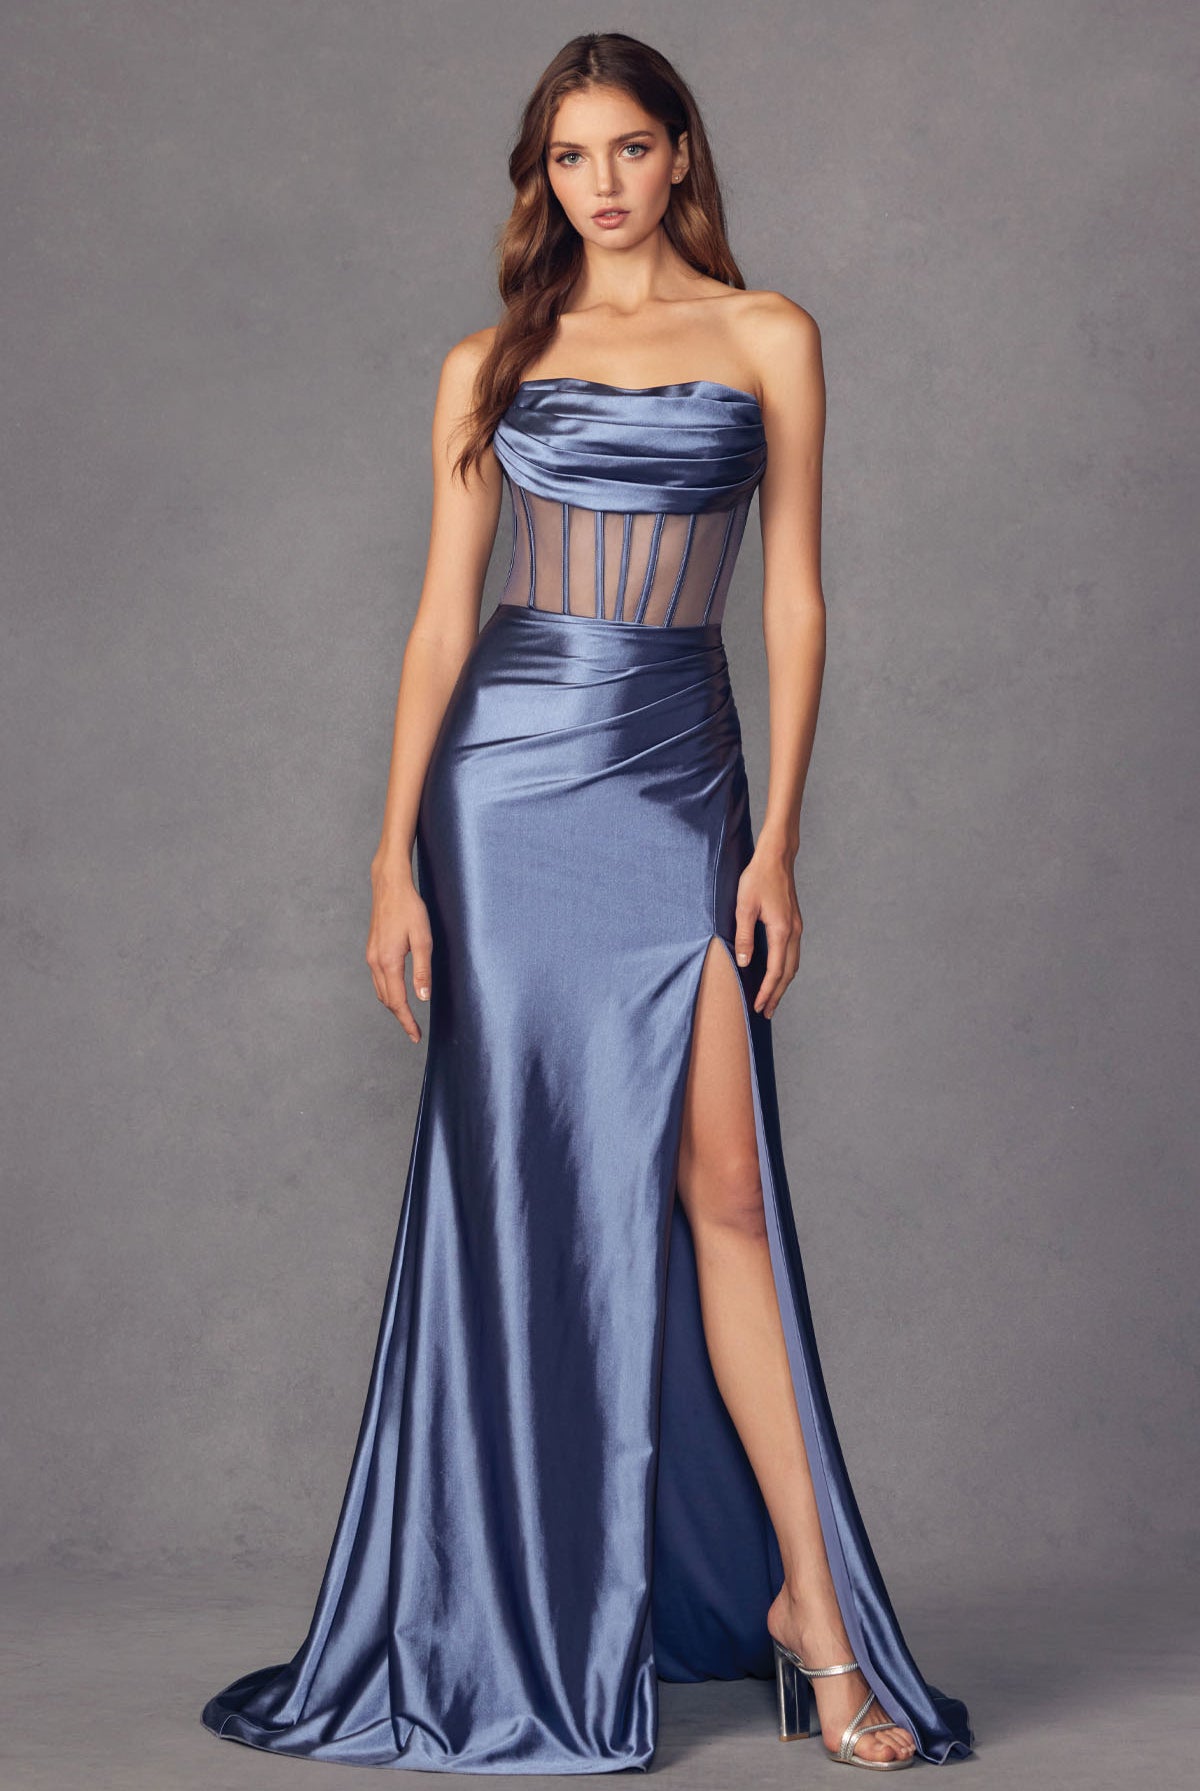 Smoky blue sheer corset top evening dress